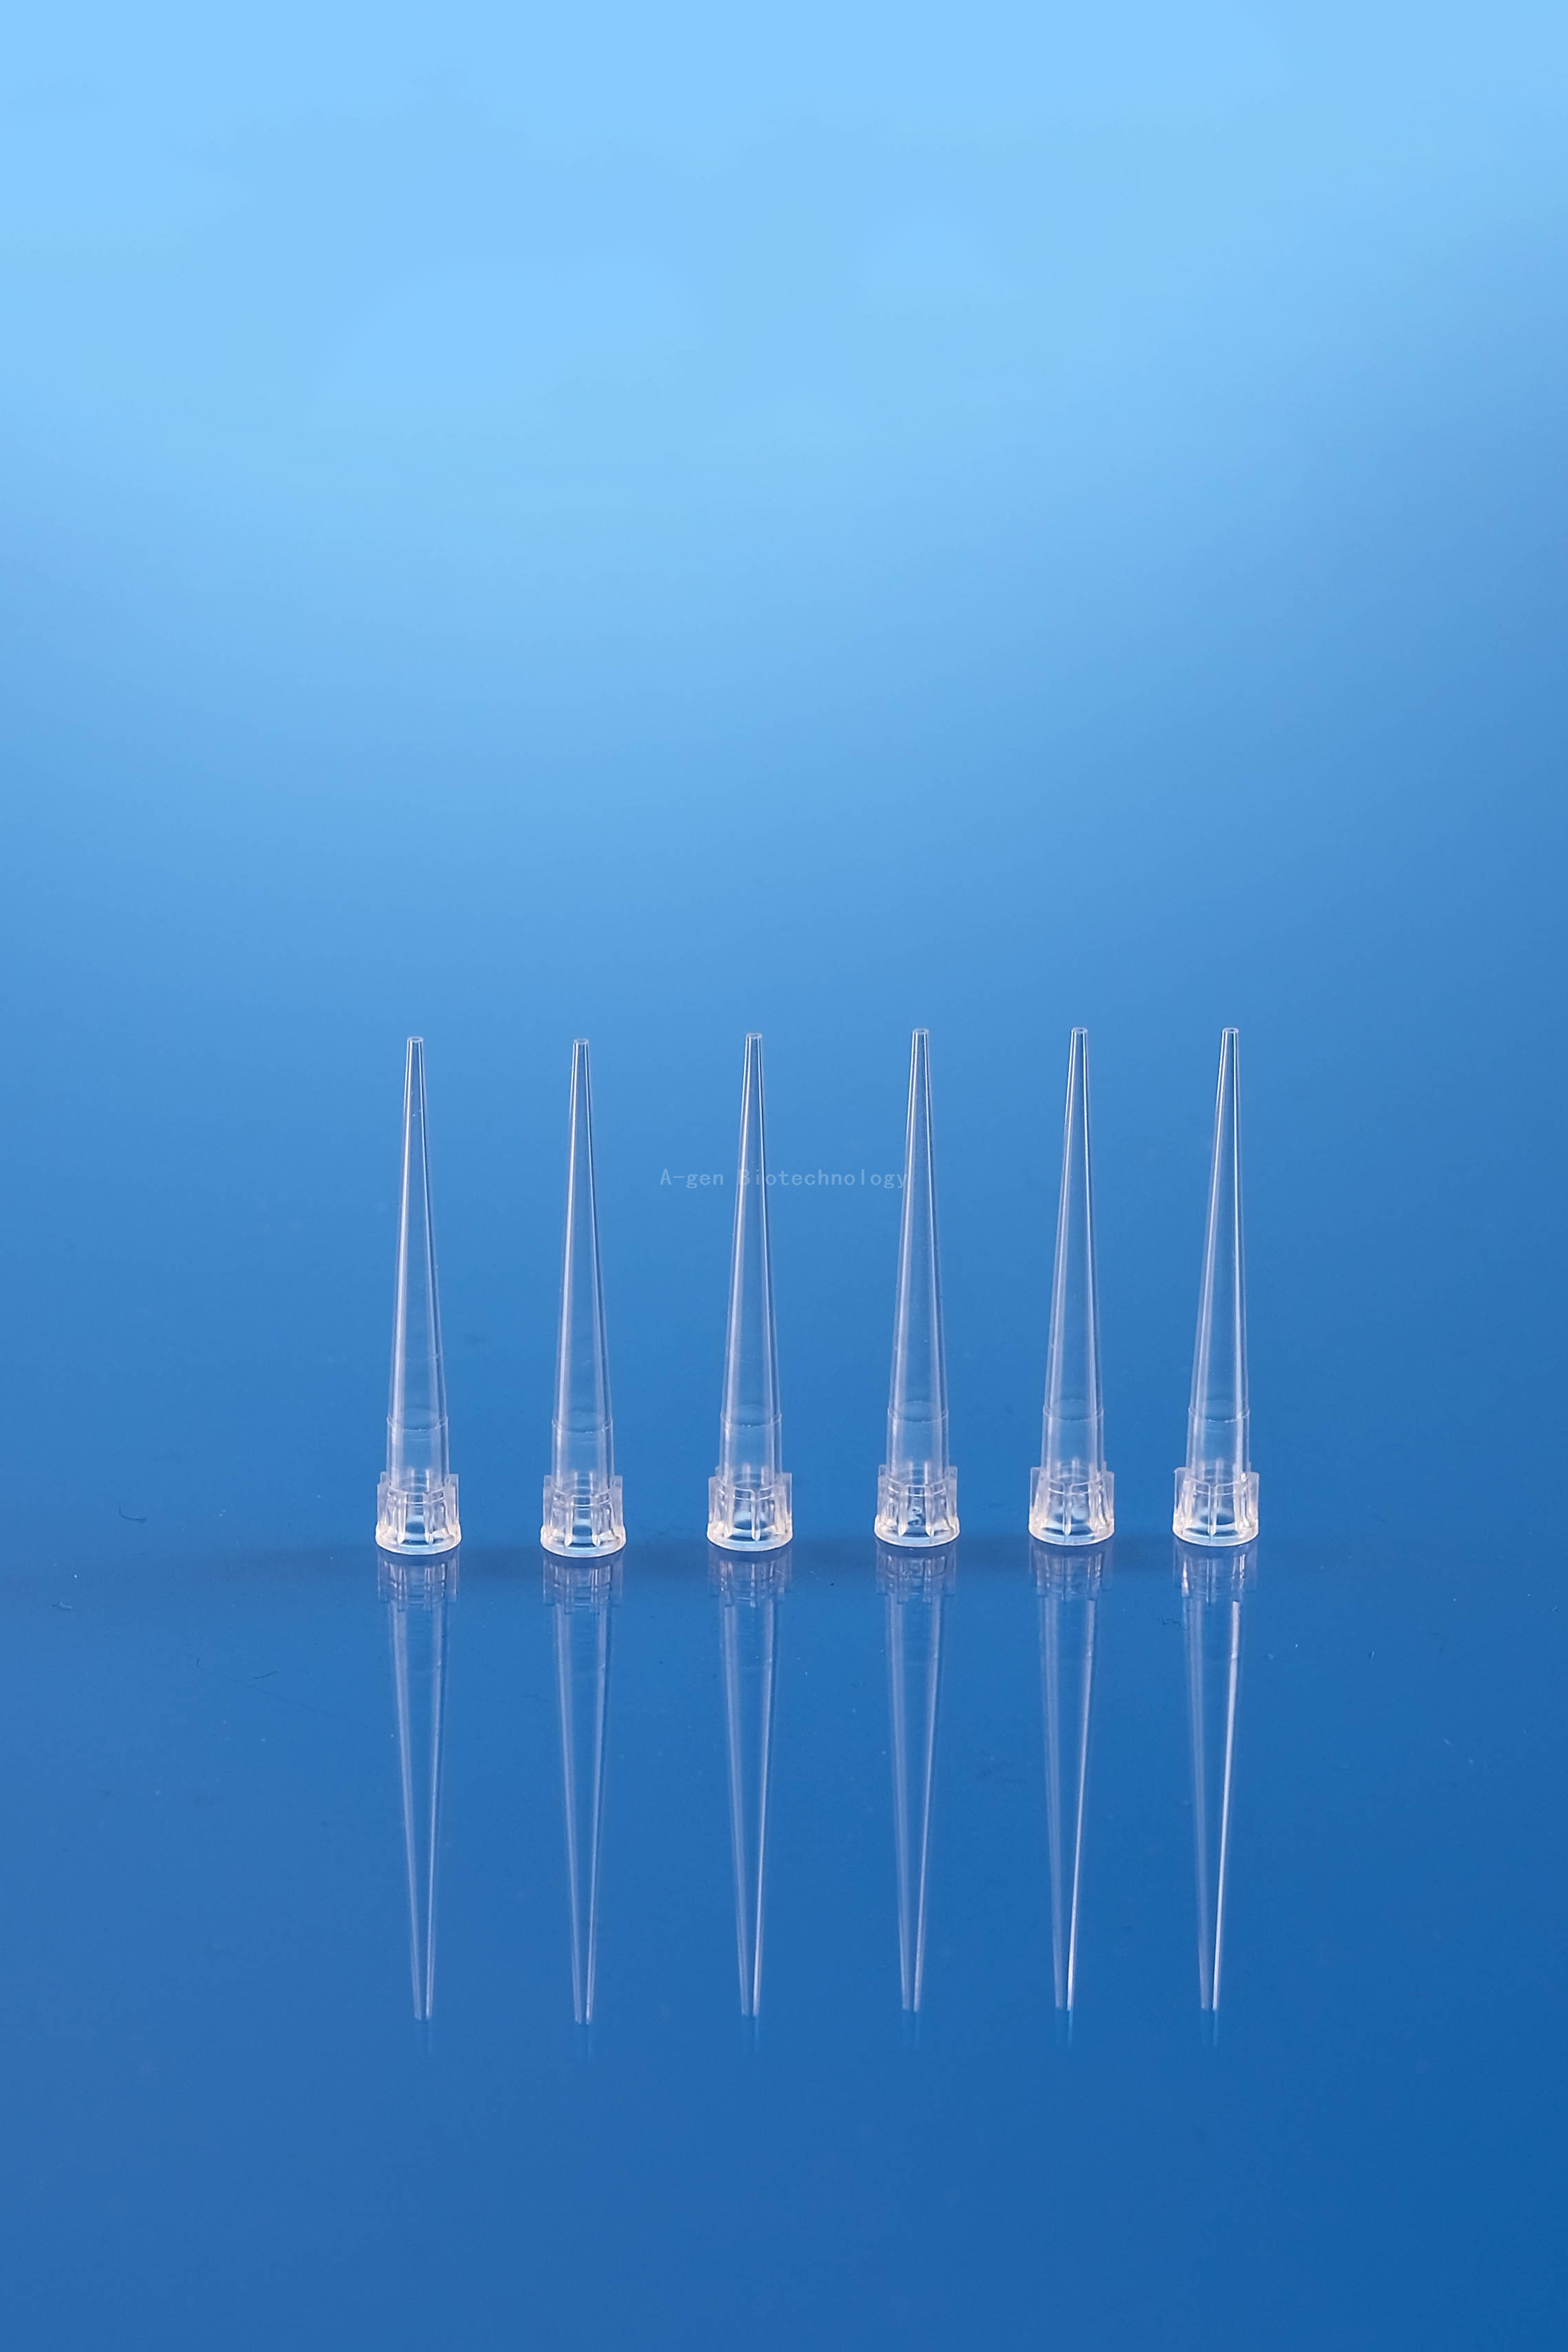 Agilent 70μL Transparent Pipette Tip (Racked,sterilized) for Liquid Transfer VT-384-70-RS No Filter